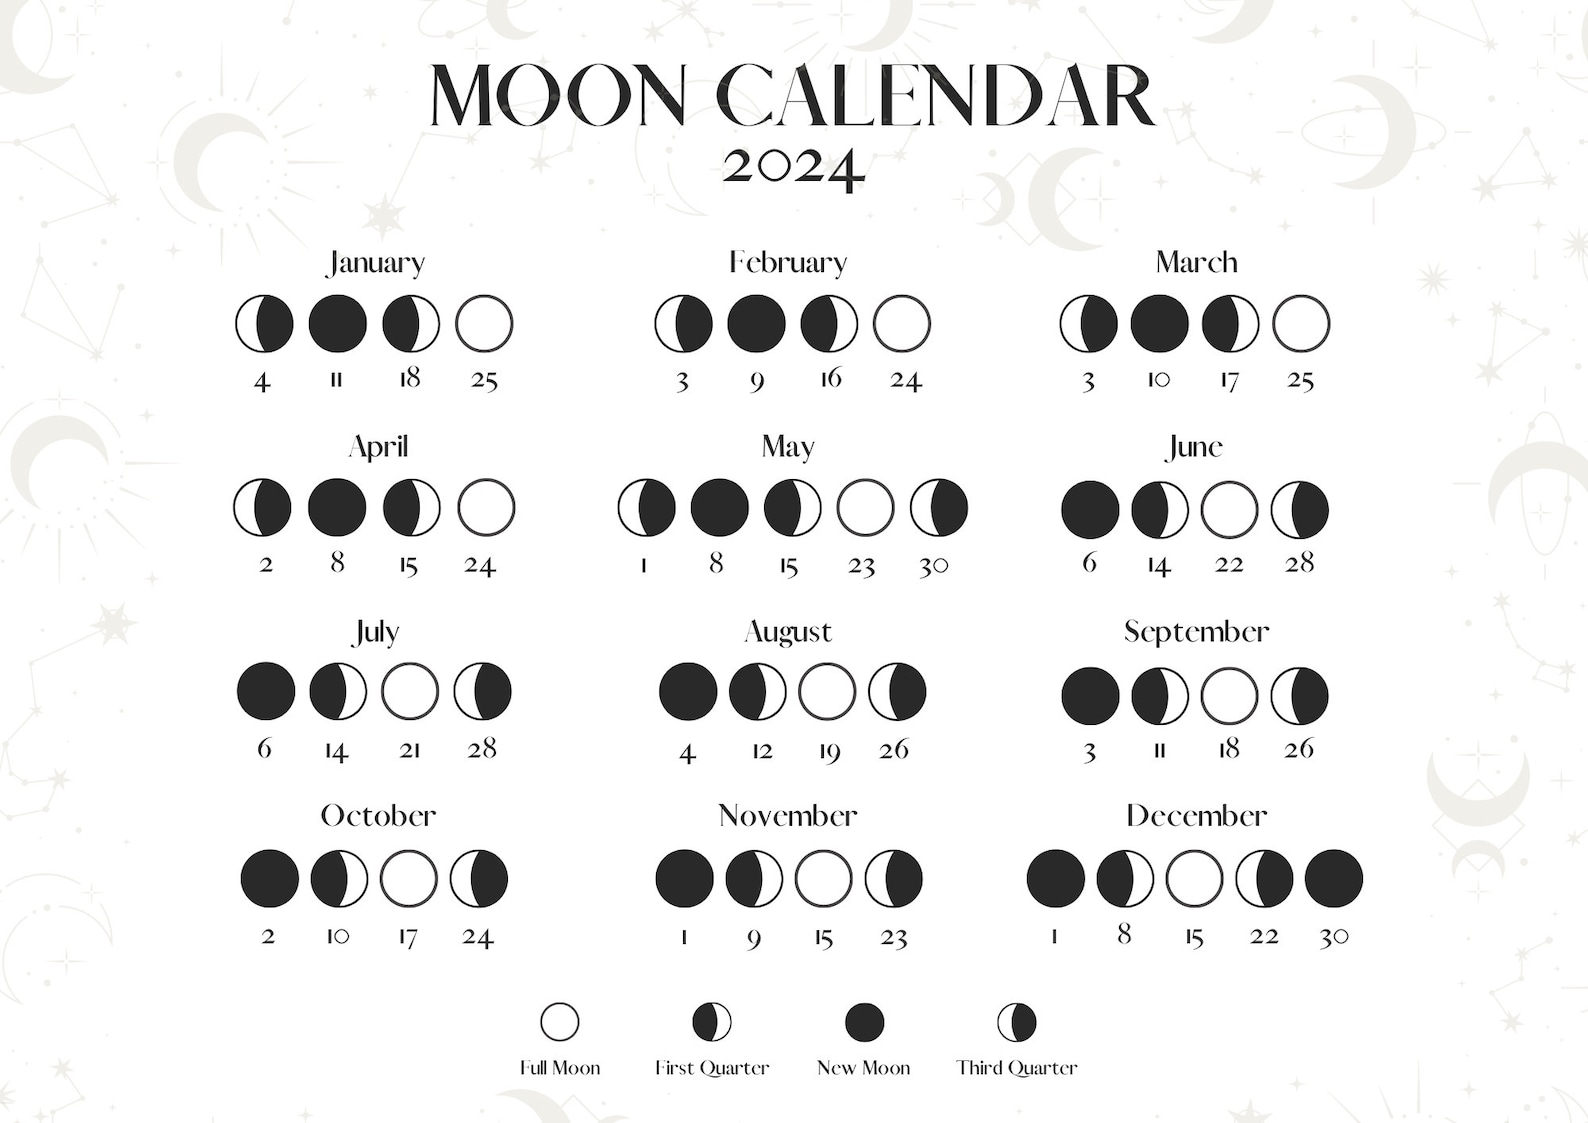 moon-calendar-2024-moon-phases-lunar-calendar-printable-in-a4-size-png